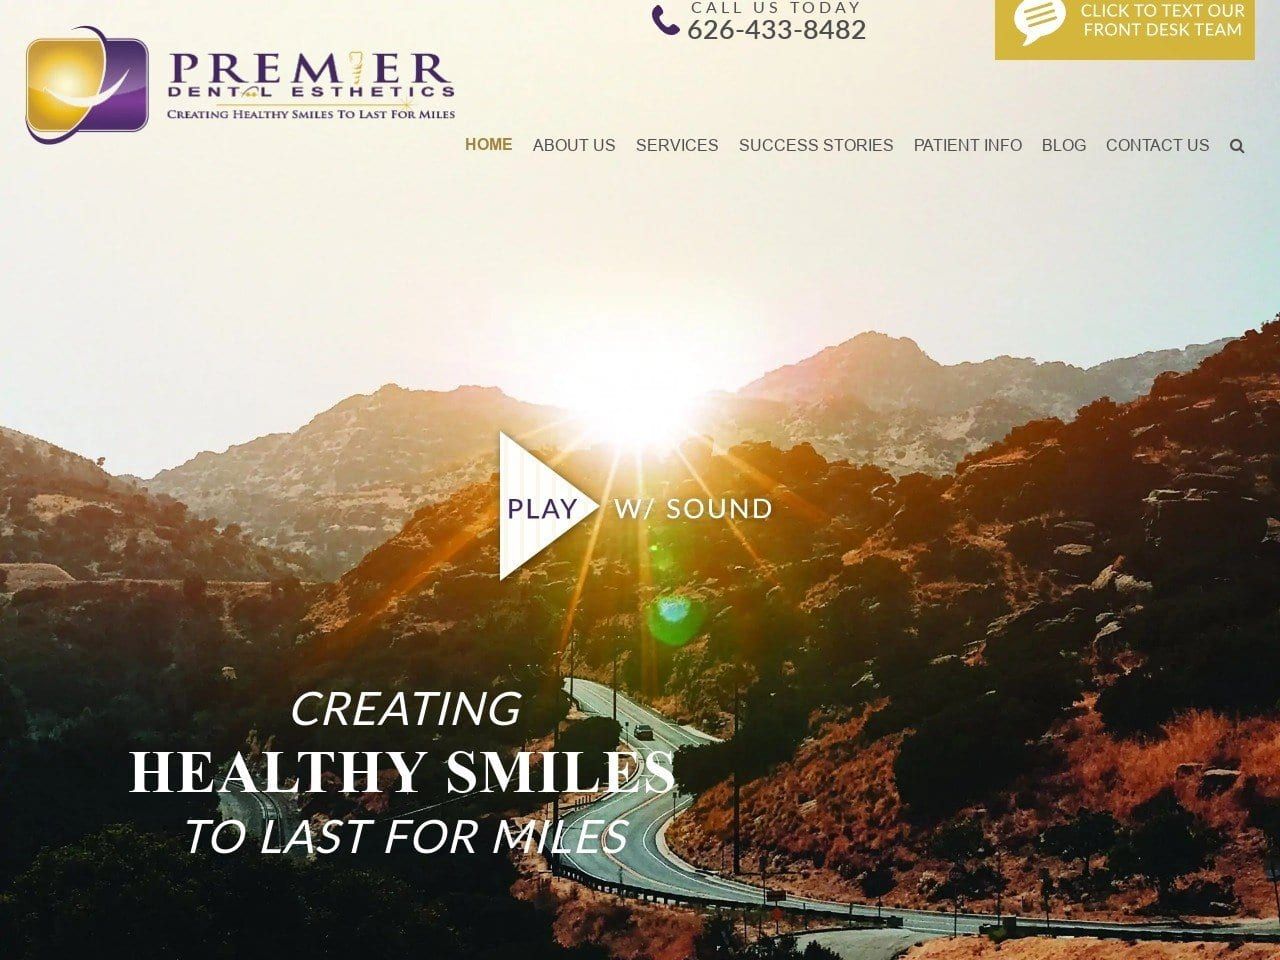 Premier Dental Esthetics Website Screenshot from smilesofarcadia.com